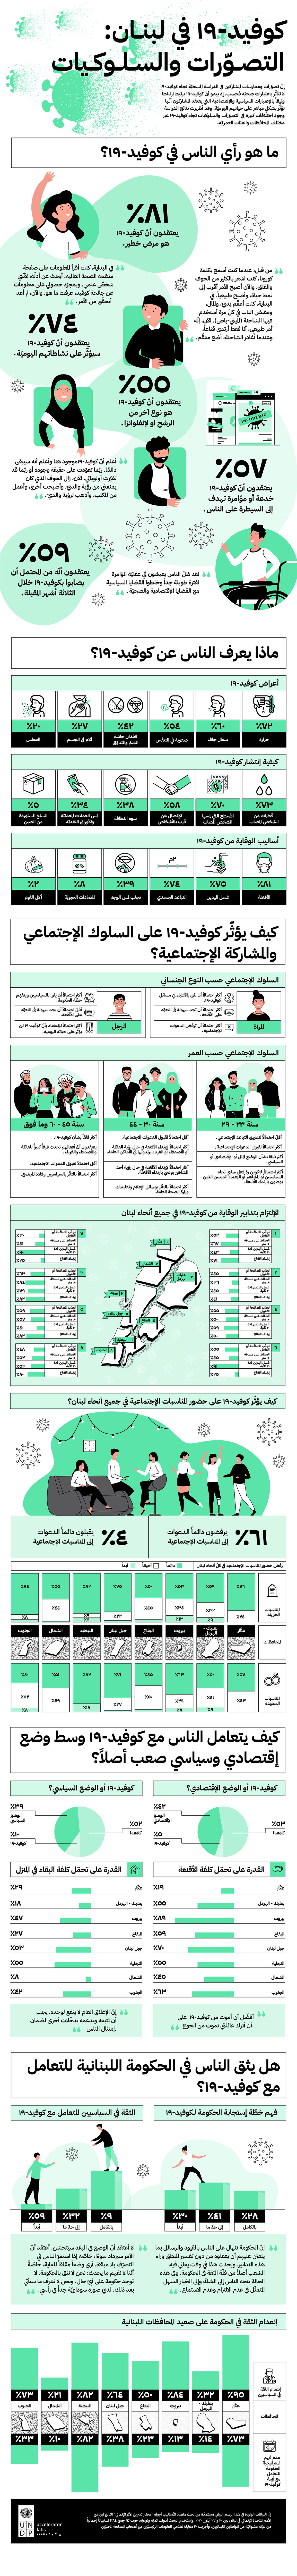 UNDP-Infographic-arabic-version@3x